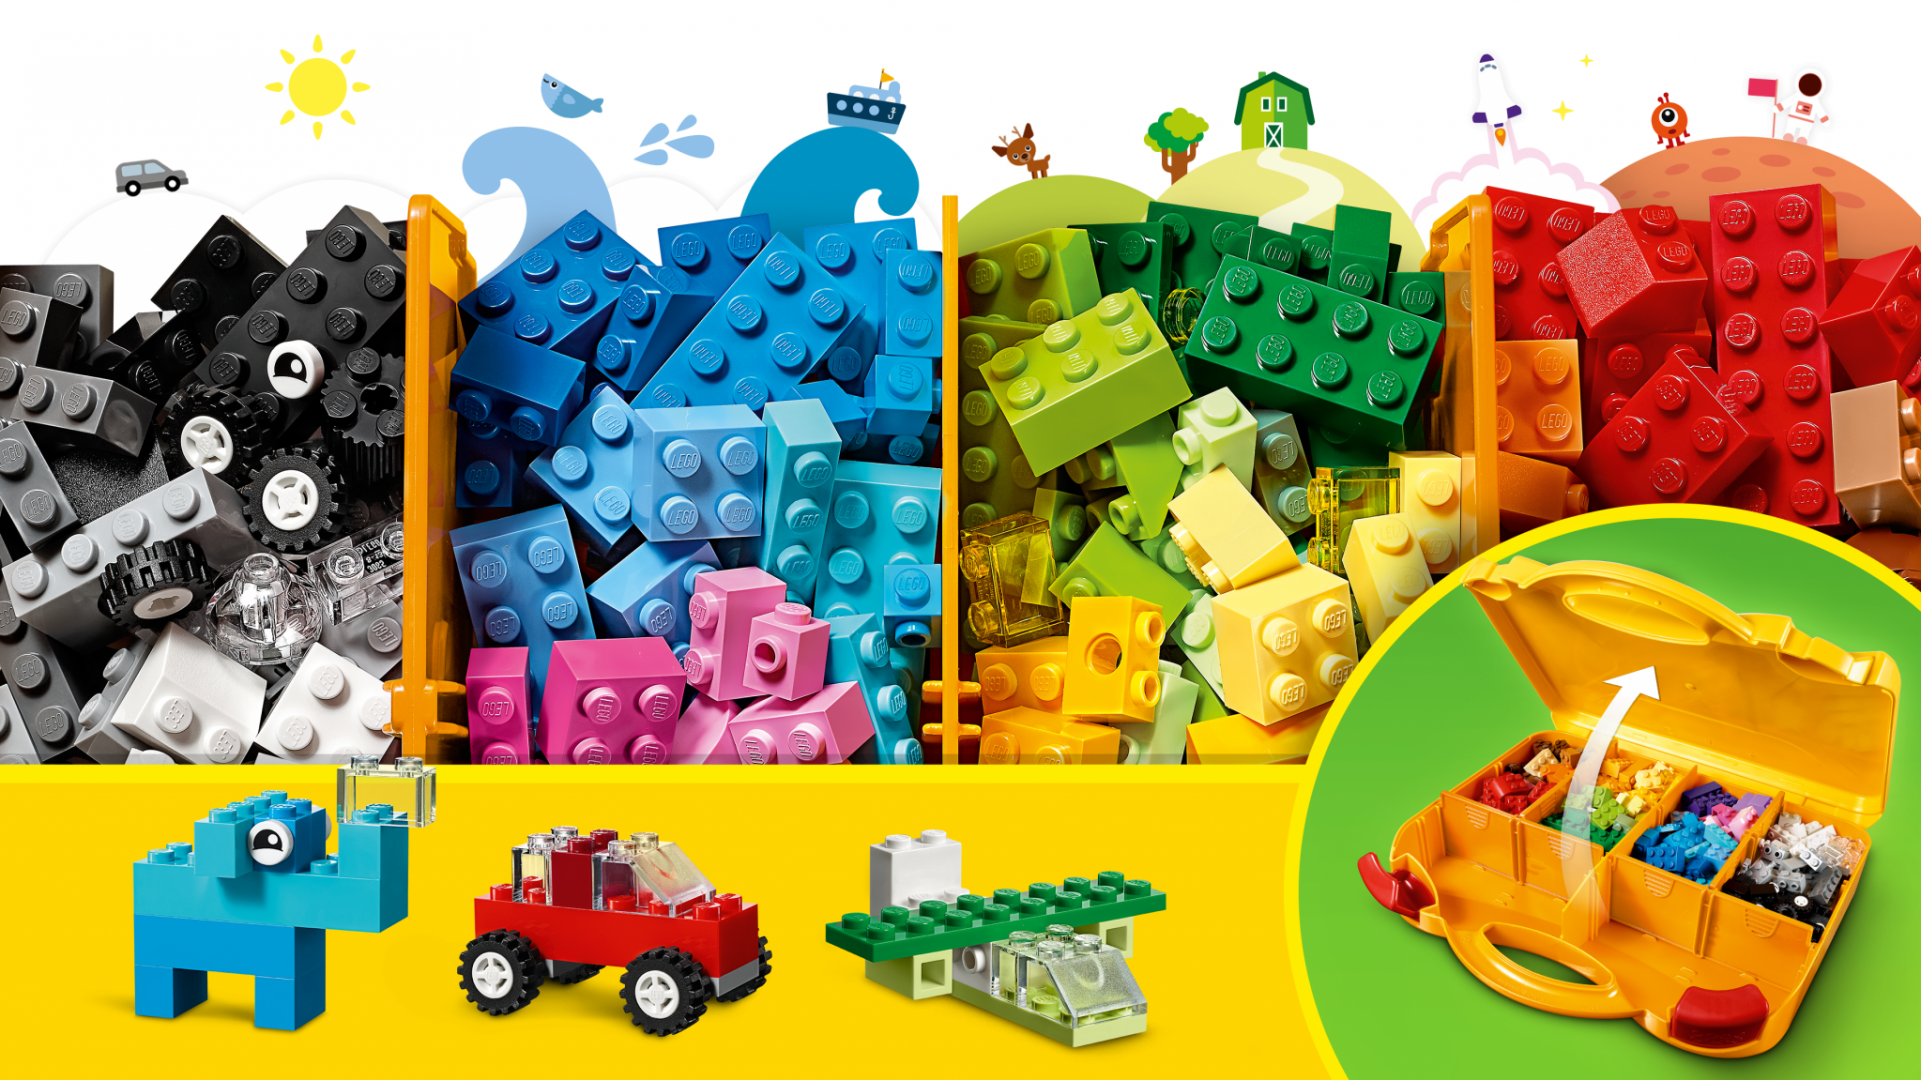 Set de constructie Lego, Valiza Creativa, 10713